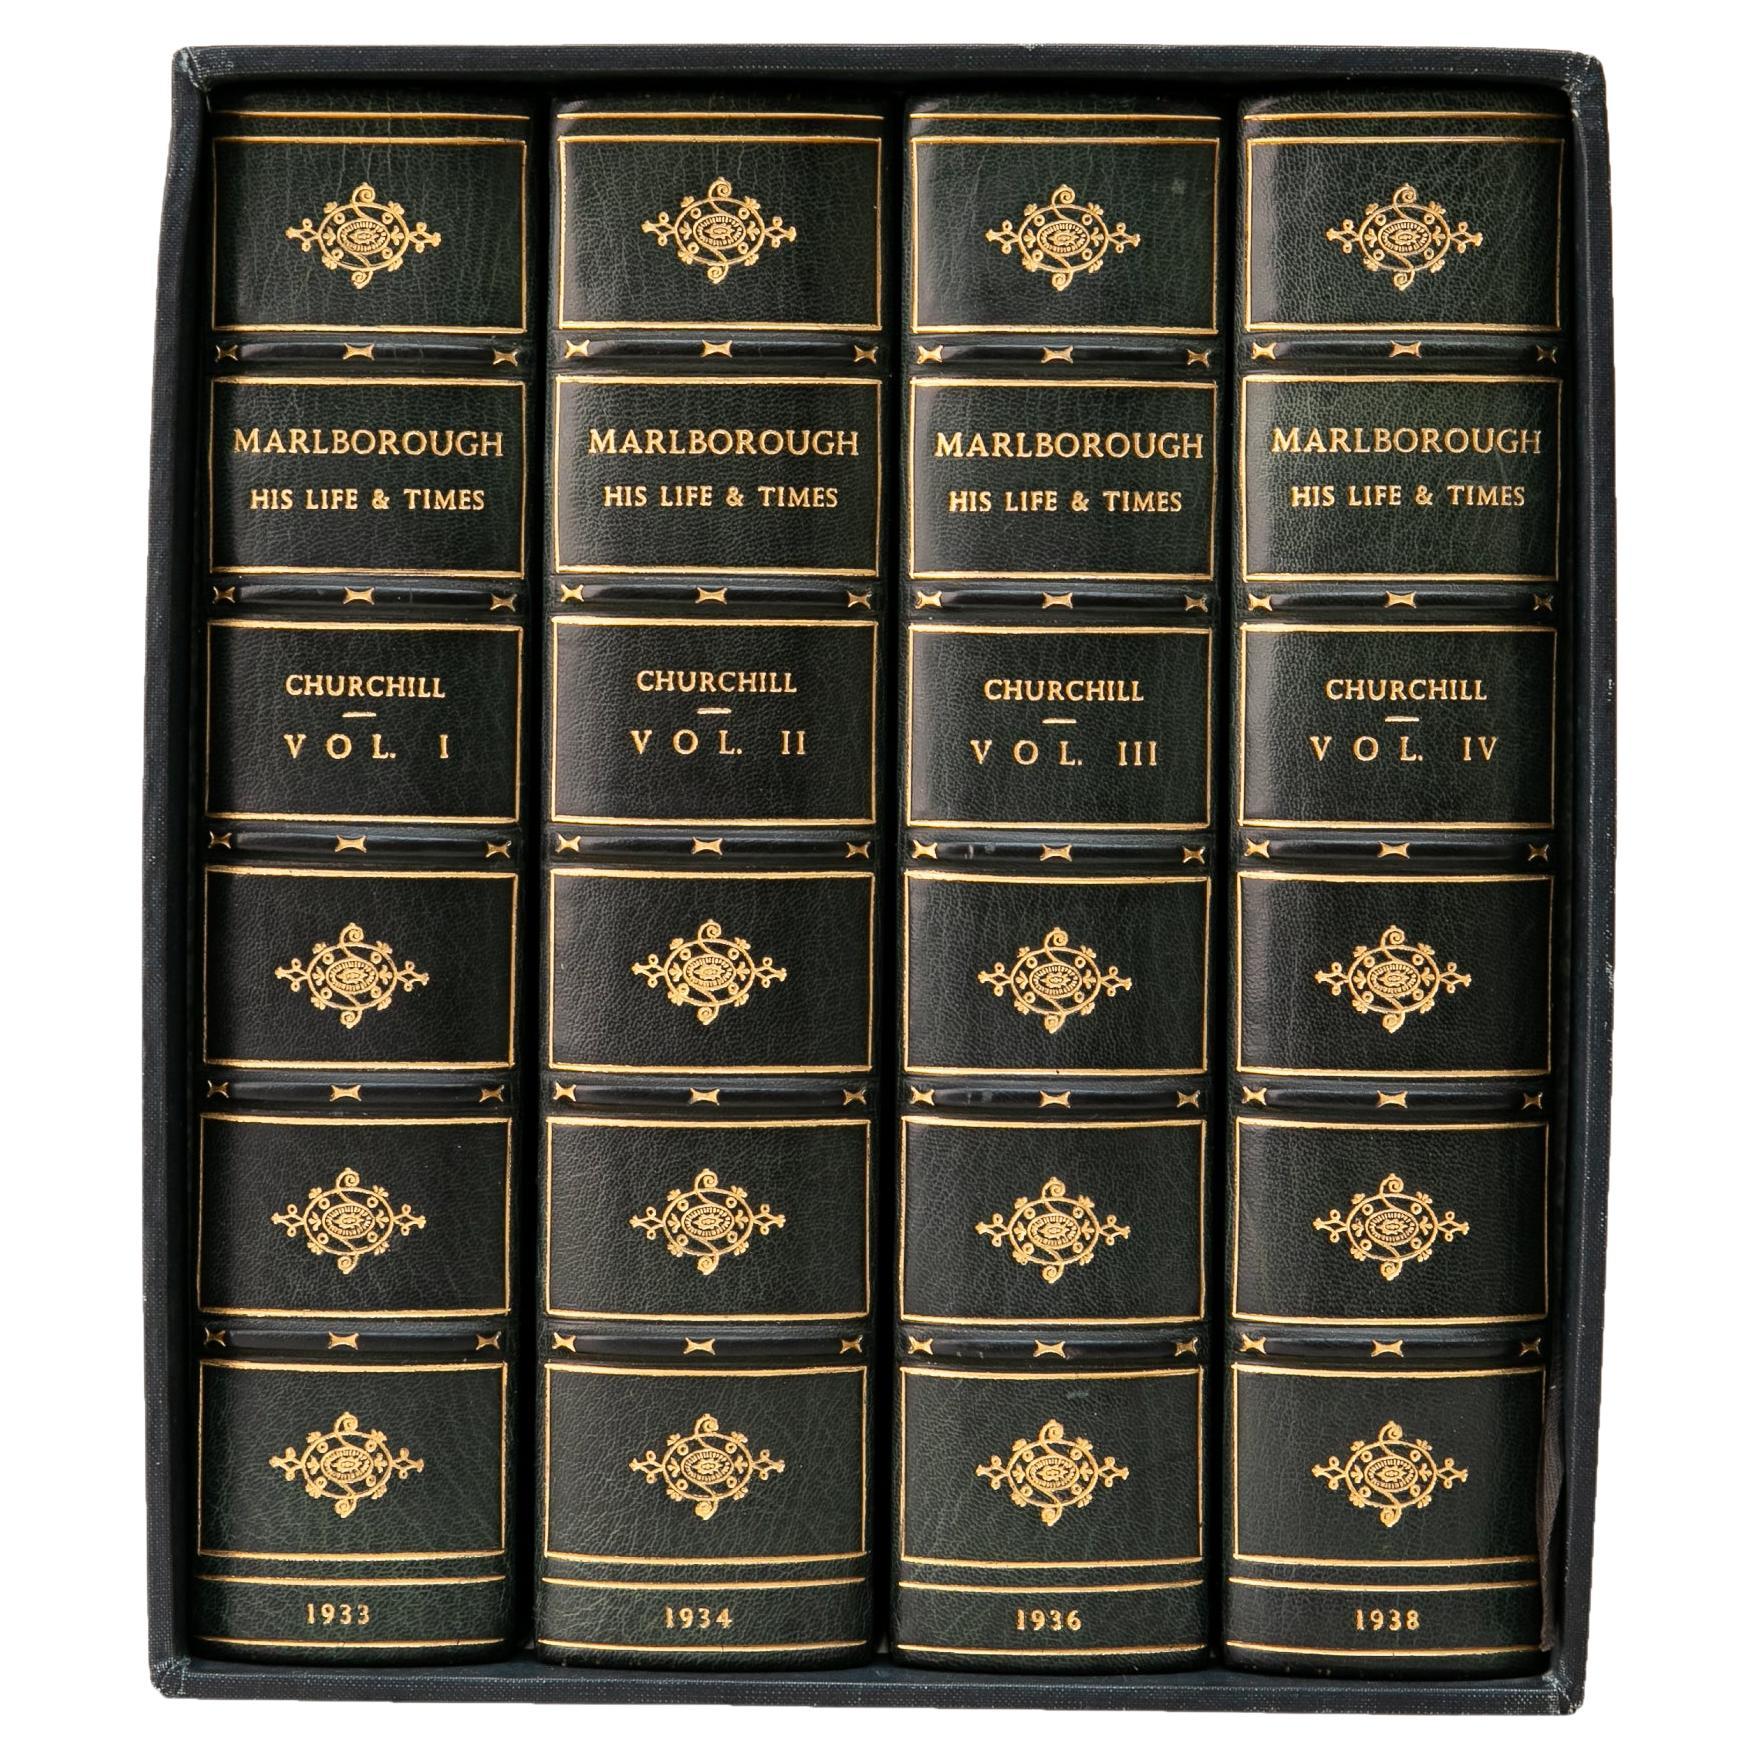 4 Volumes. Winston Churchill, Marlborough: His Life & Times. For Sale